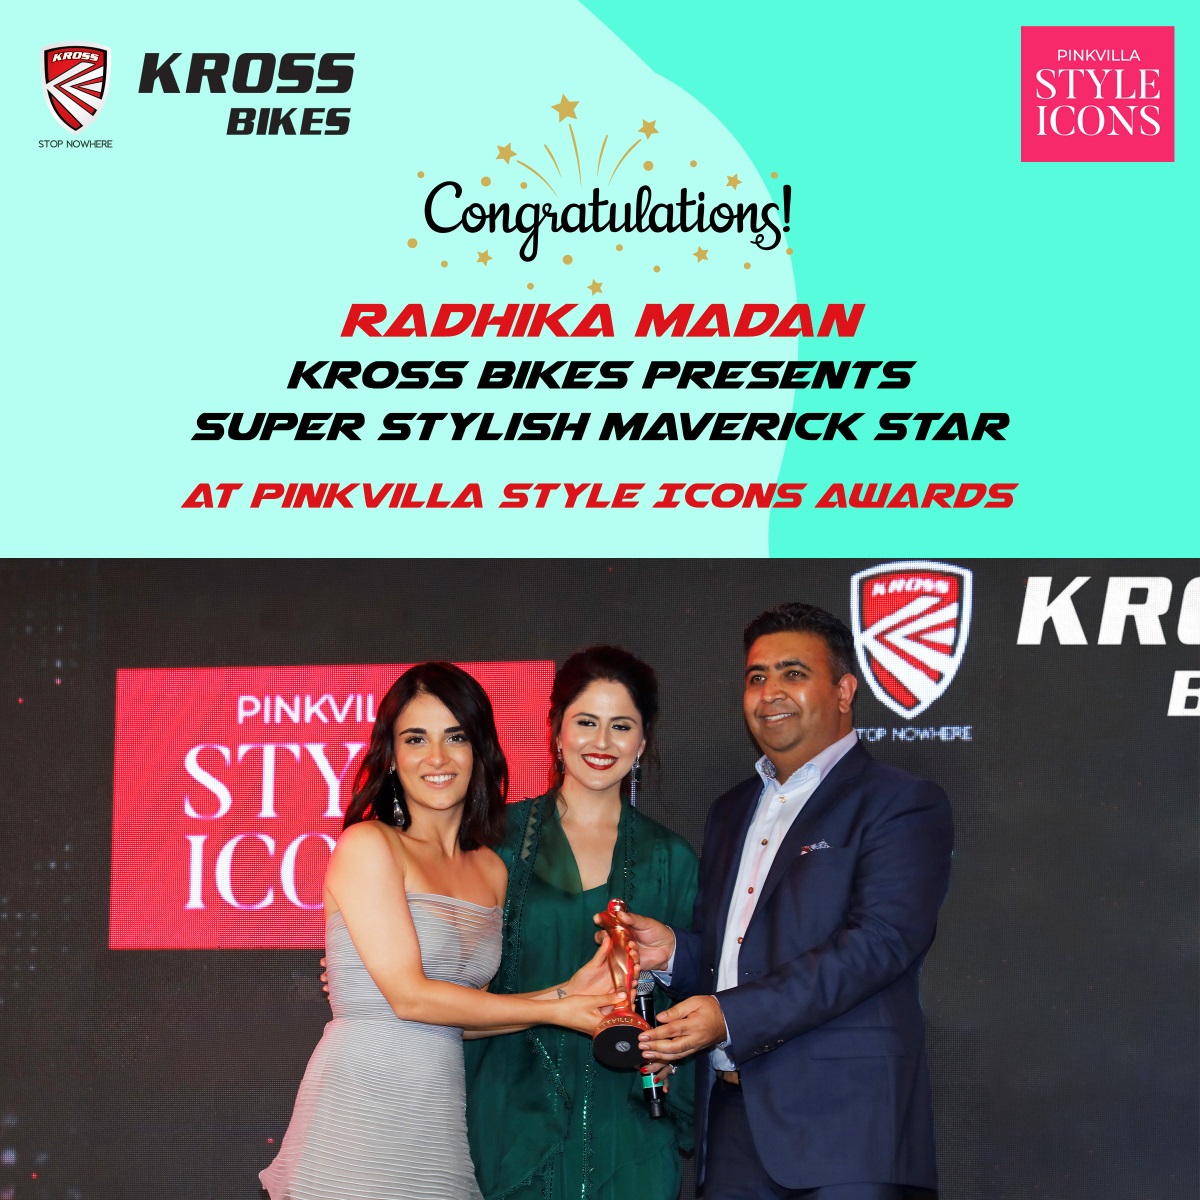 Pinkvilla Style Icons Awards: Radhika Madan wins Super Stylish Maverick Star